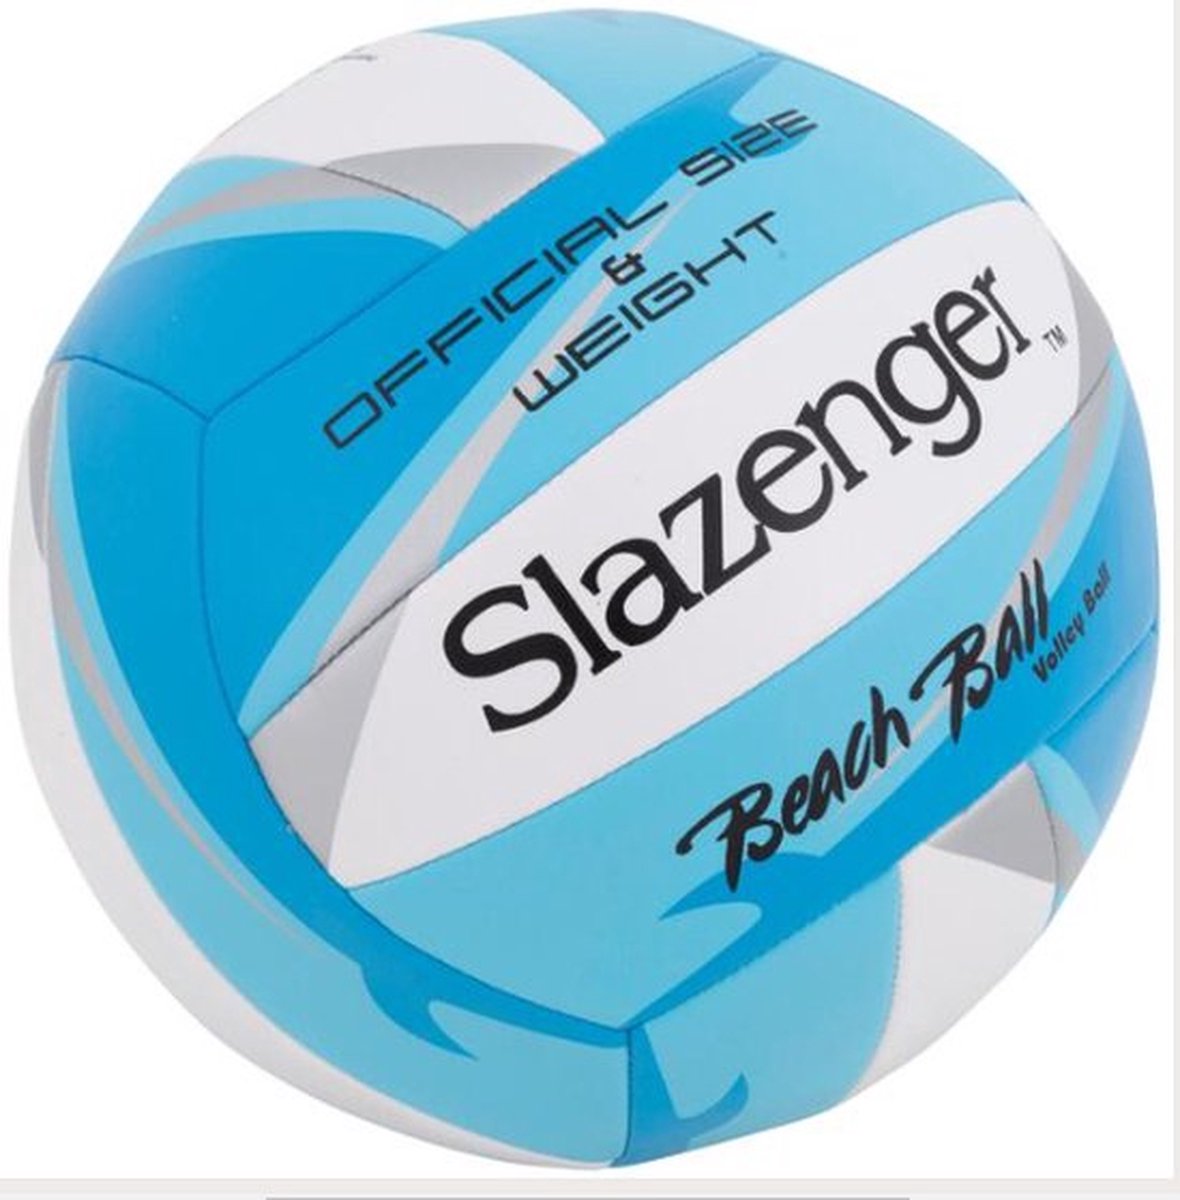 Volleybal - Slazenger - Bal - Strandbal - Sport - Spel - Blauw